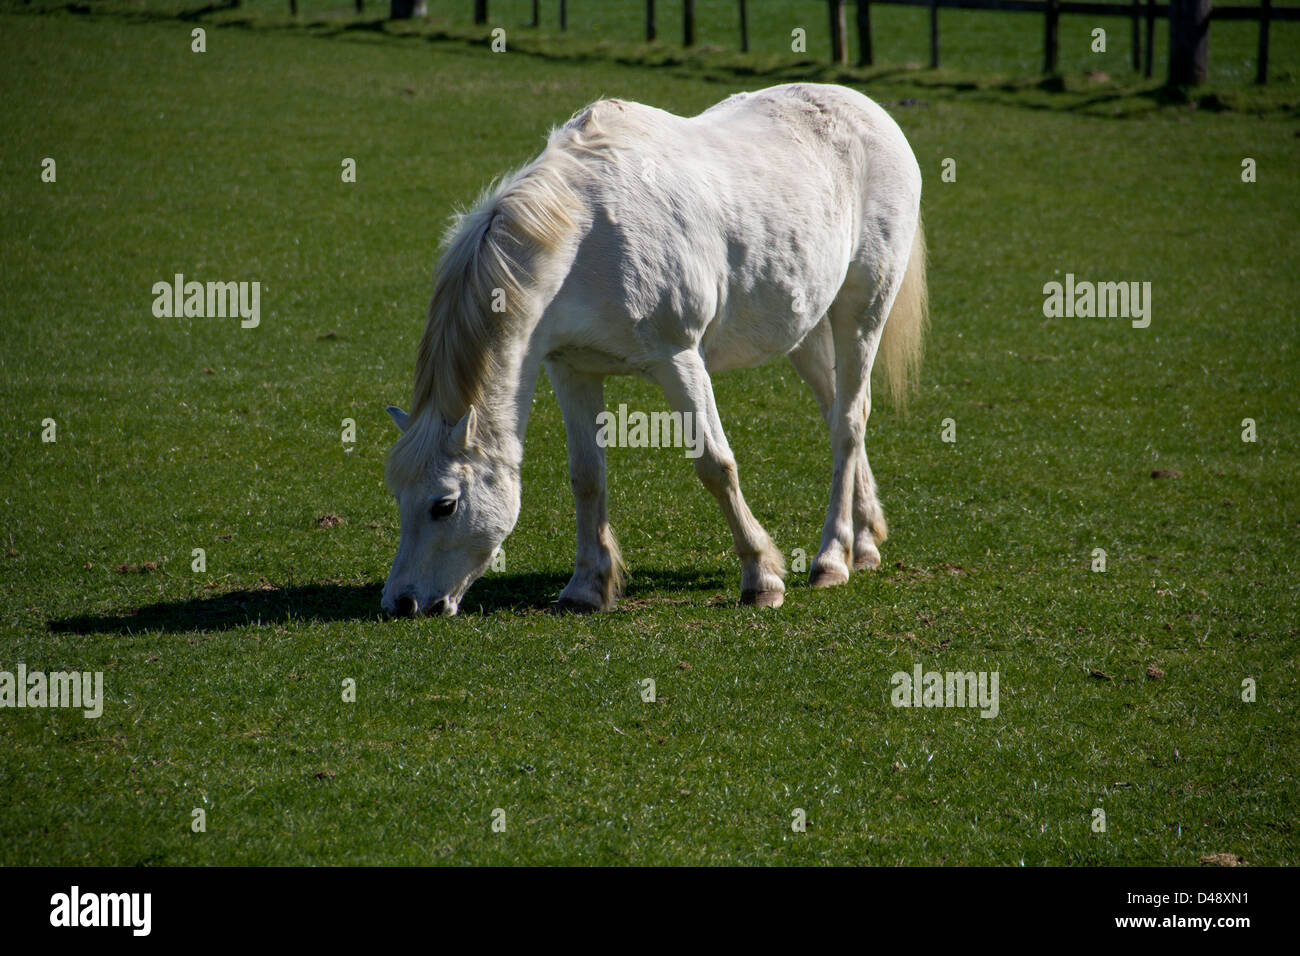 A lovely white horse enjoying some grass Stock Photo